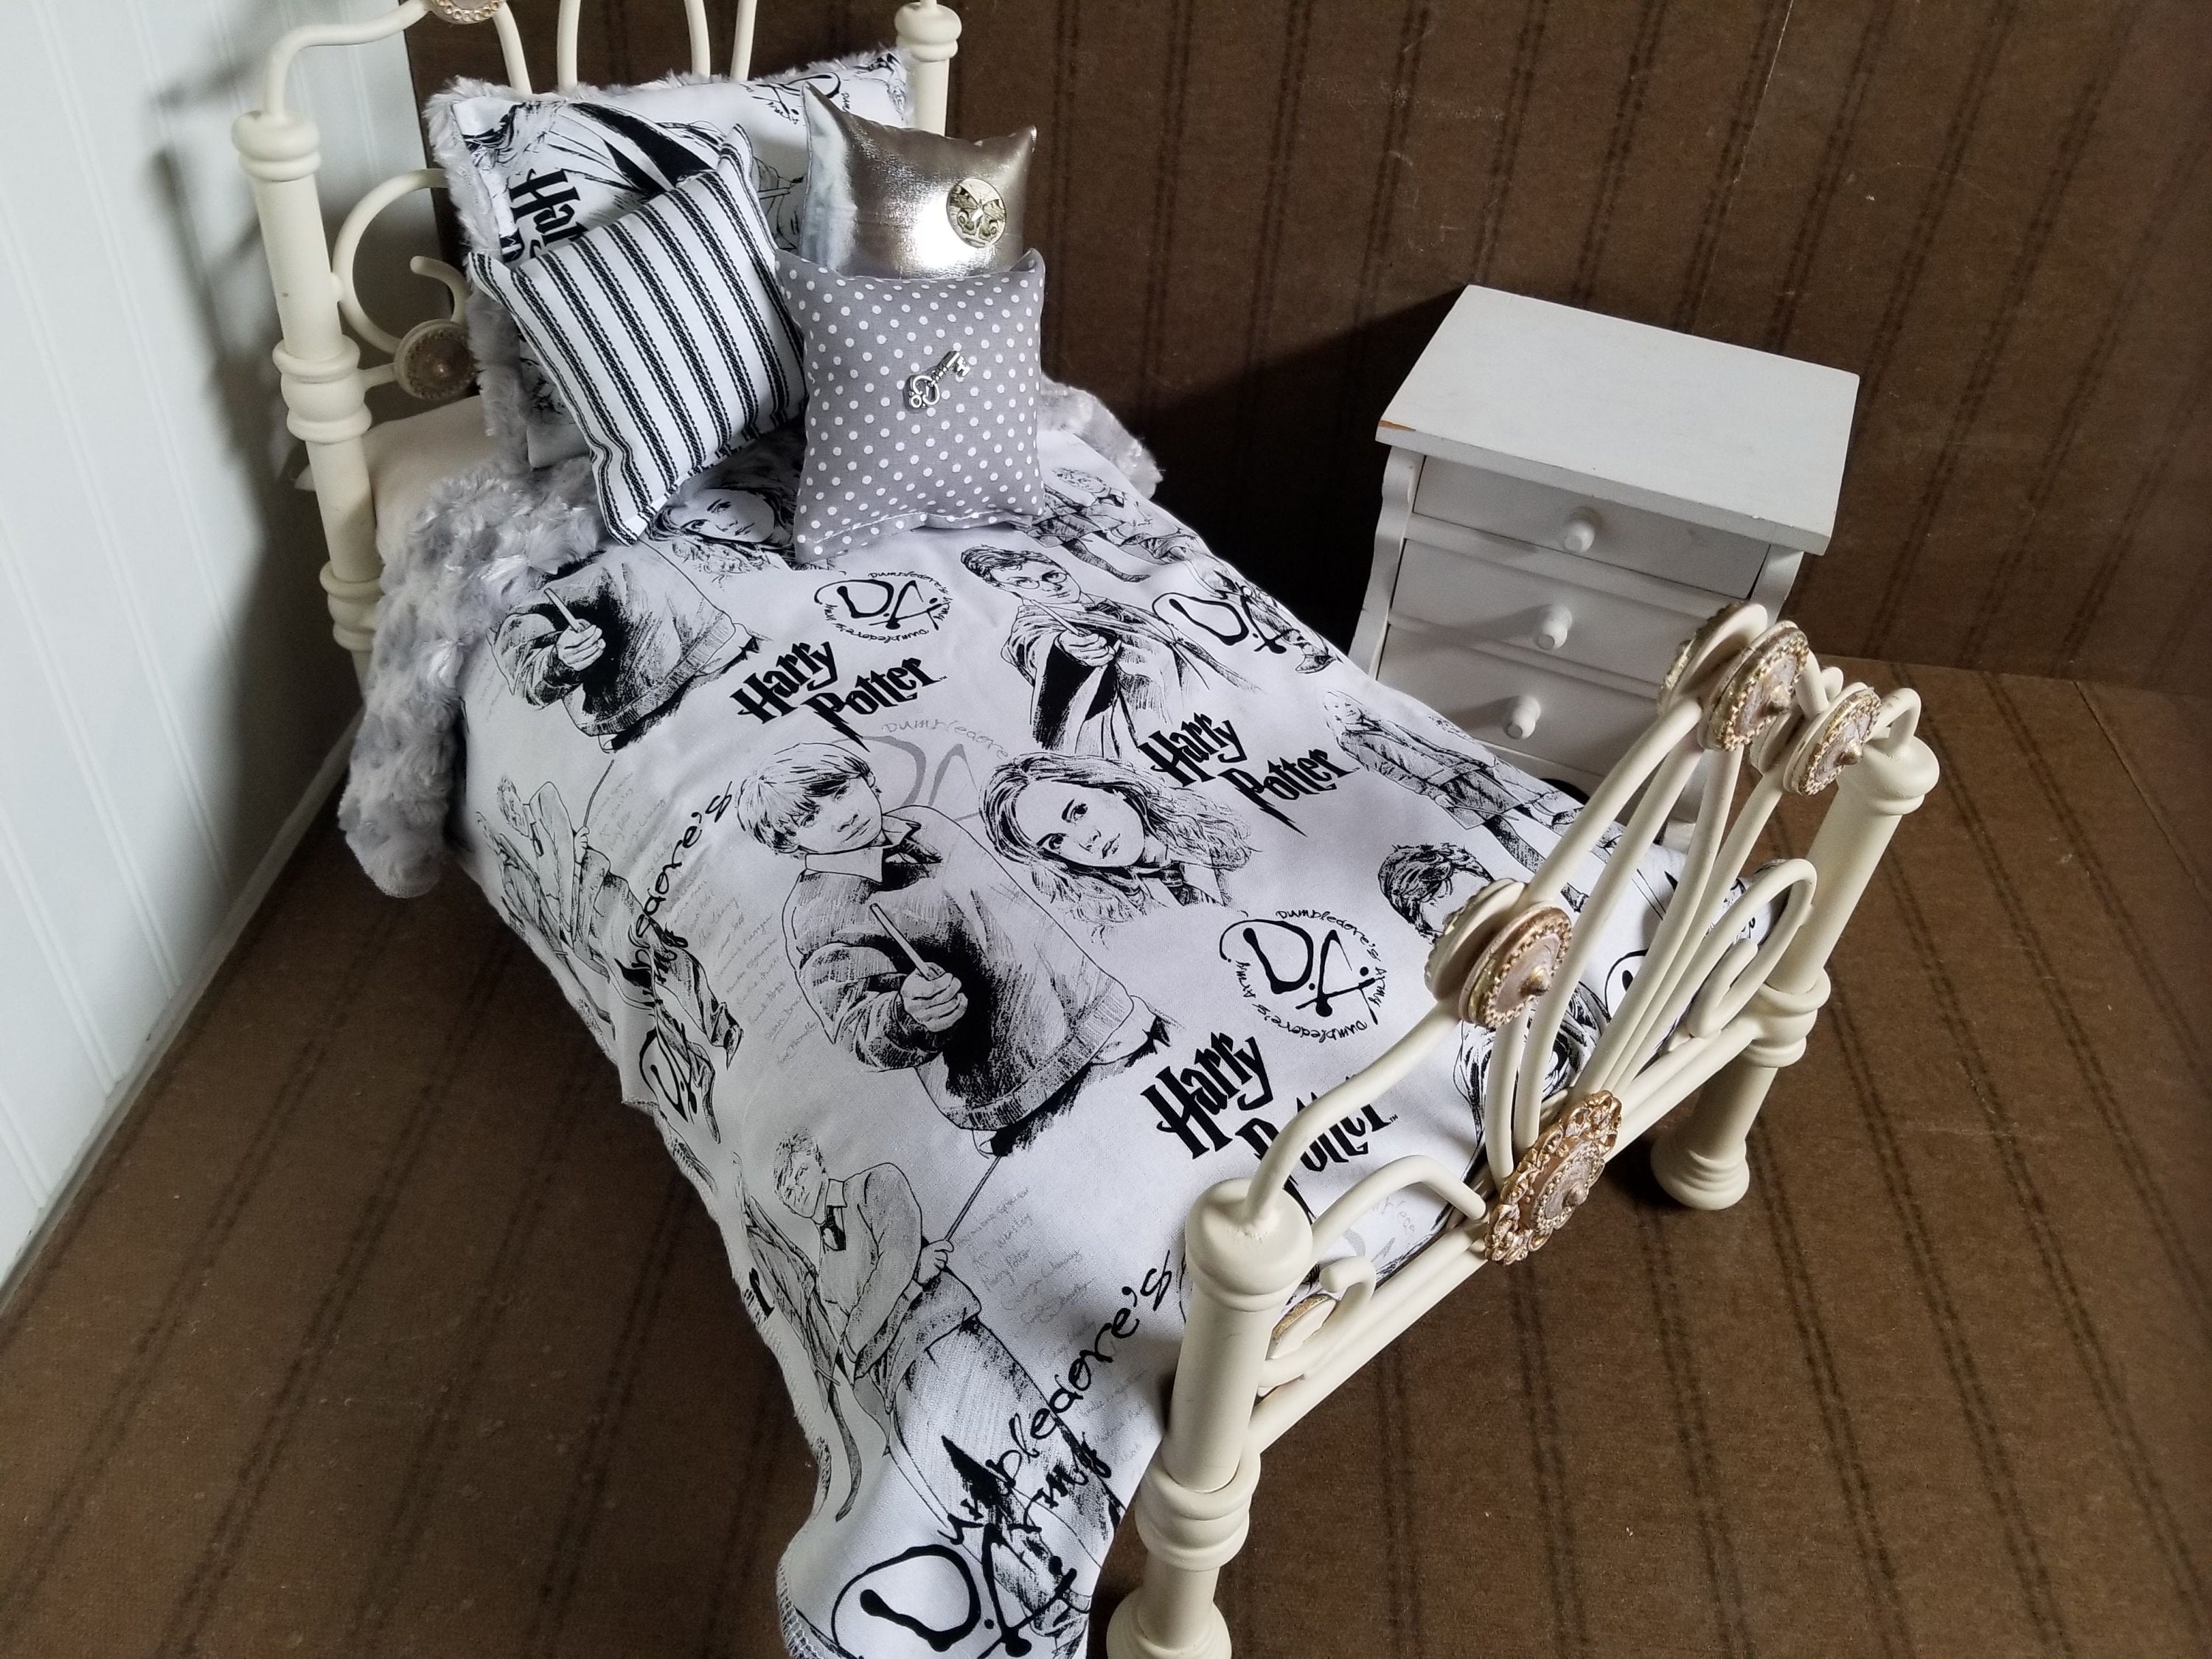 Harry Potter sheets - Bed Sheets & Pillowcases - Ogden, Utah